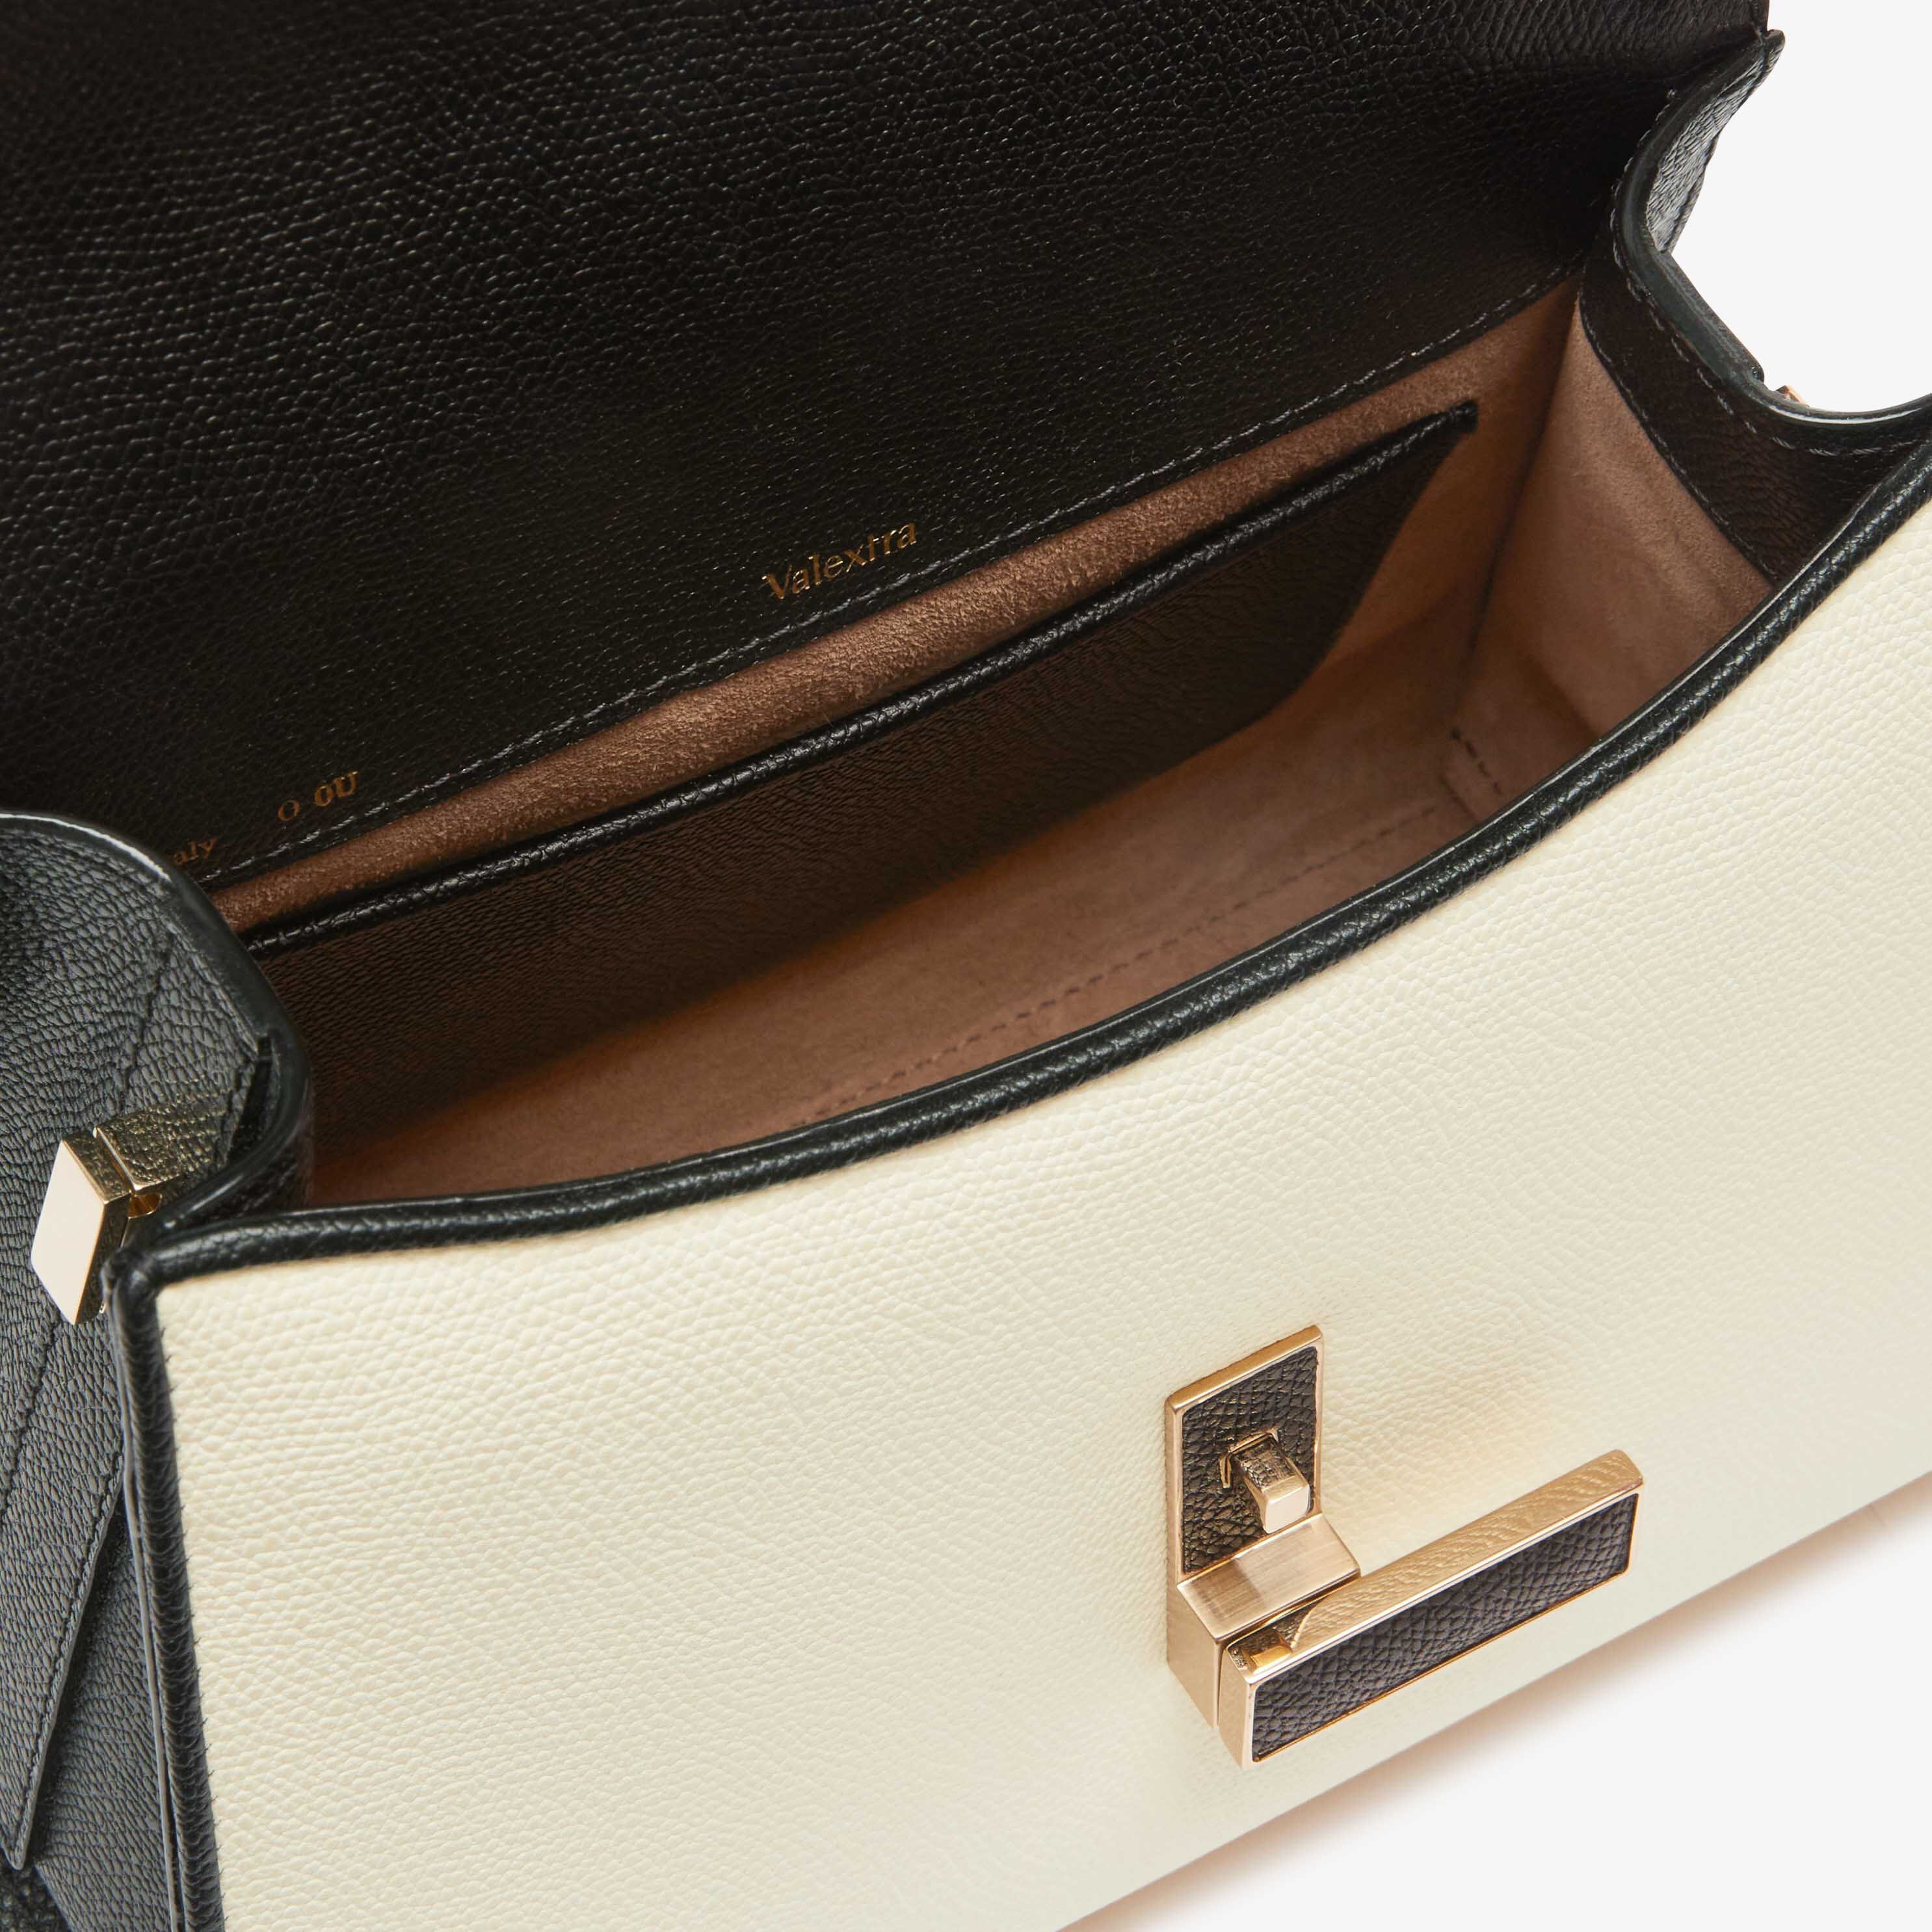 Mini iside chiaroscuro top handle bag - Pergamena White/Black - Vitello VS - Valextra - 2